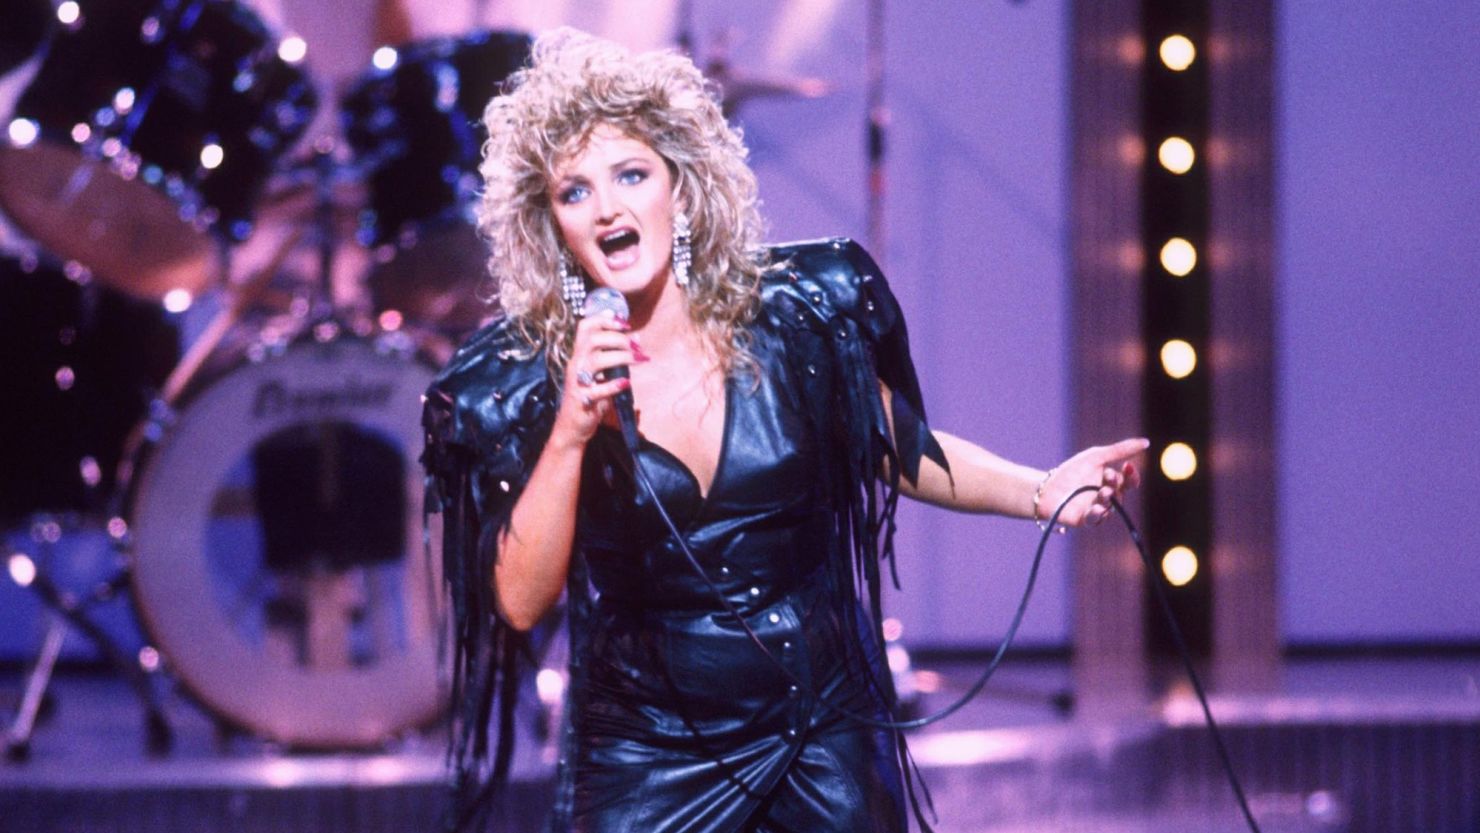 Singer Bonnie Tyler in a 1986 photo.